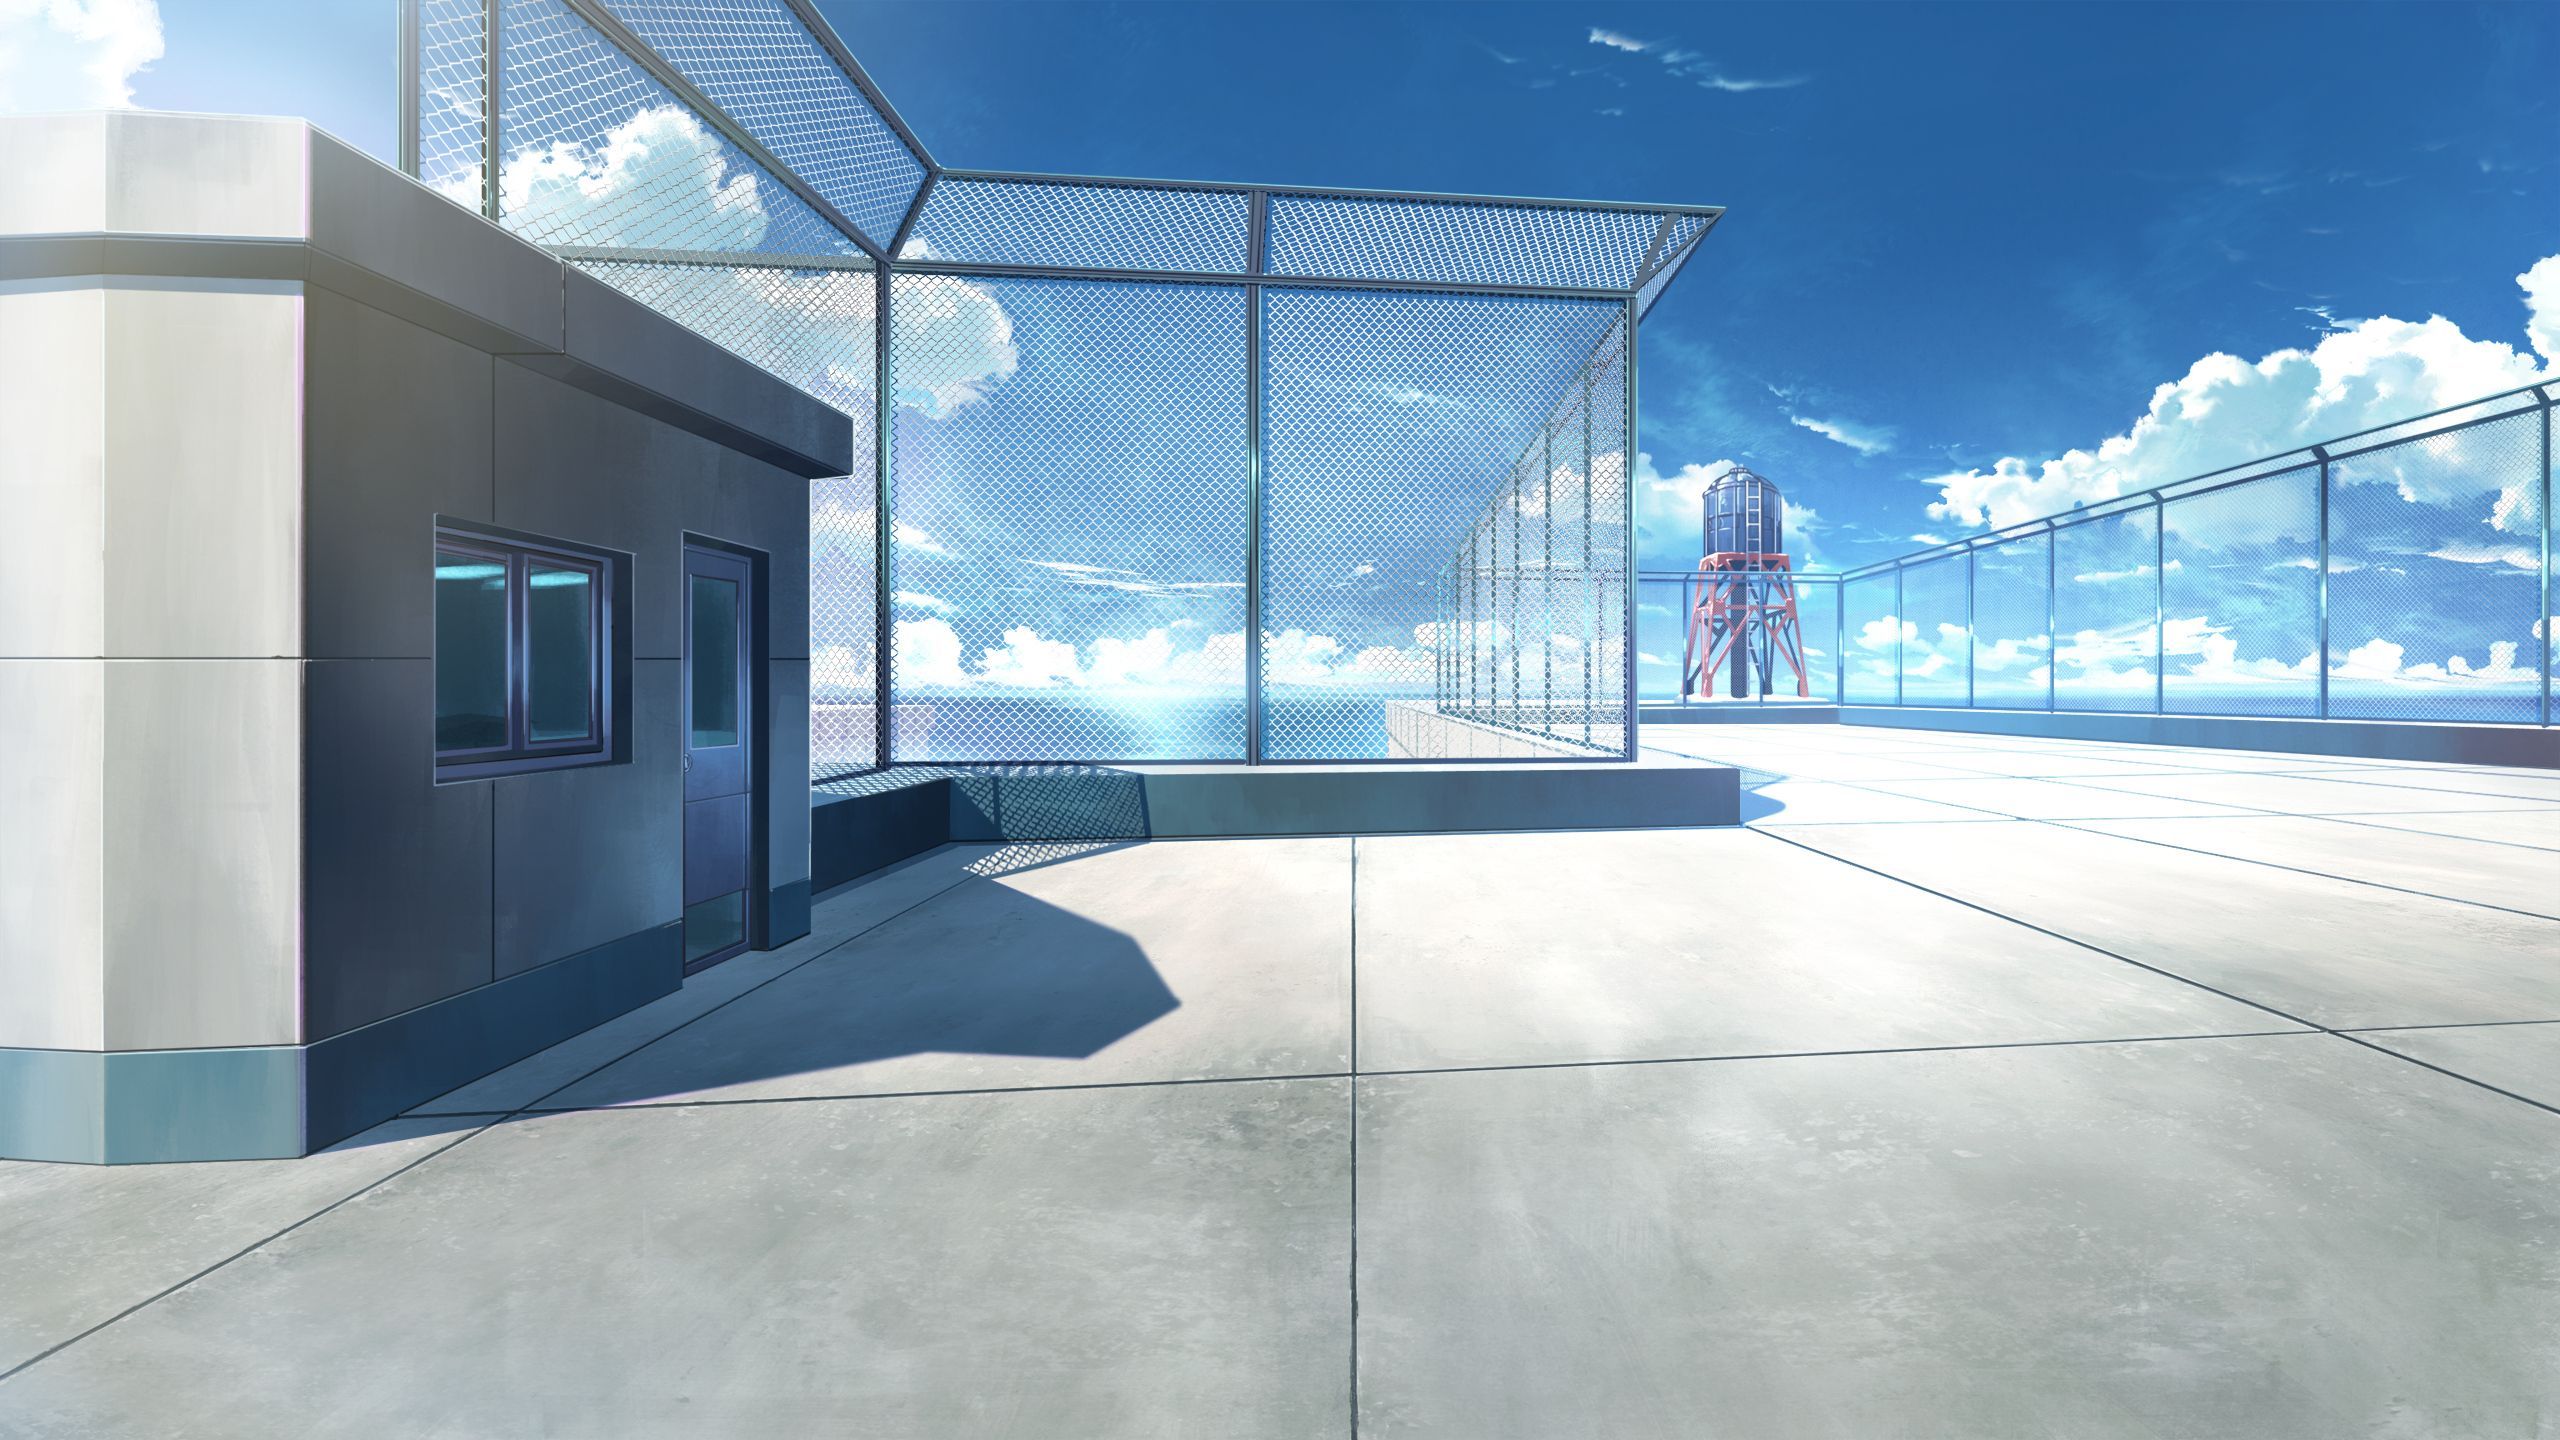 Anime School Hallway Background